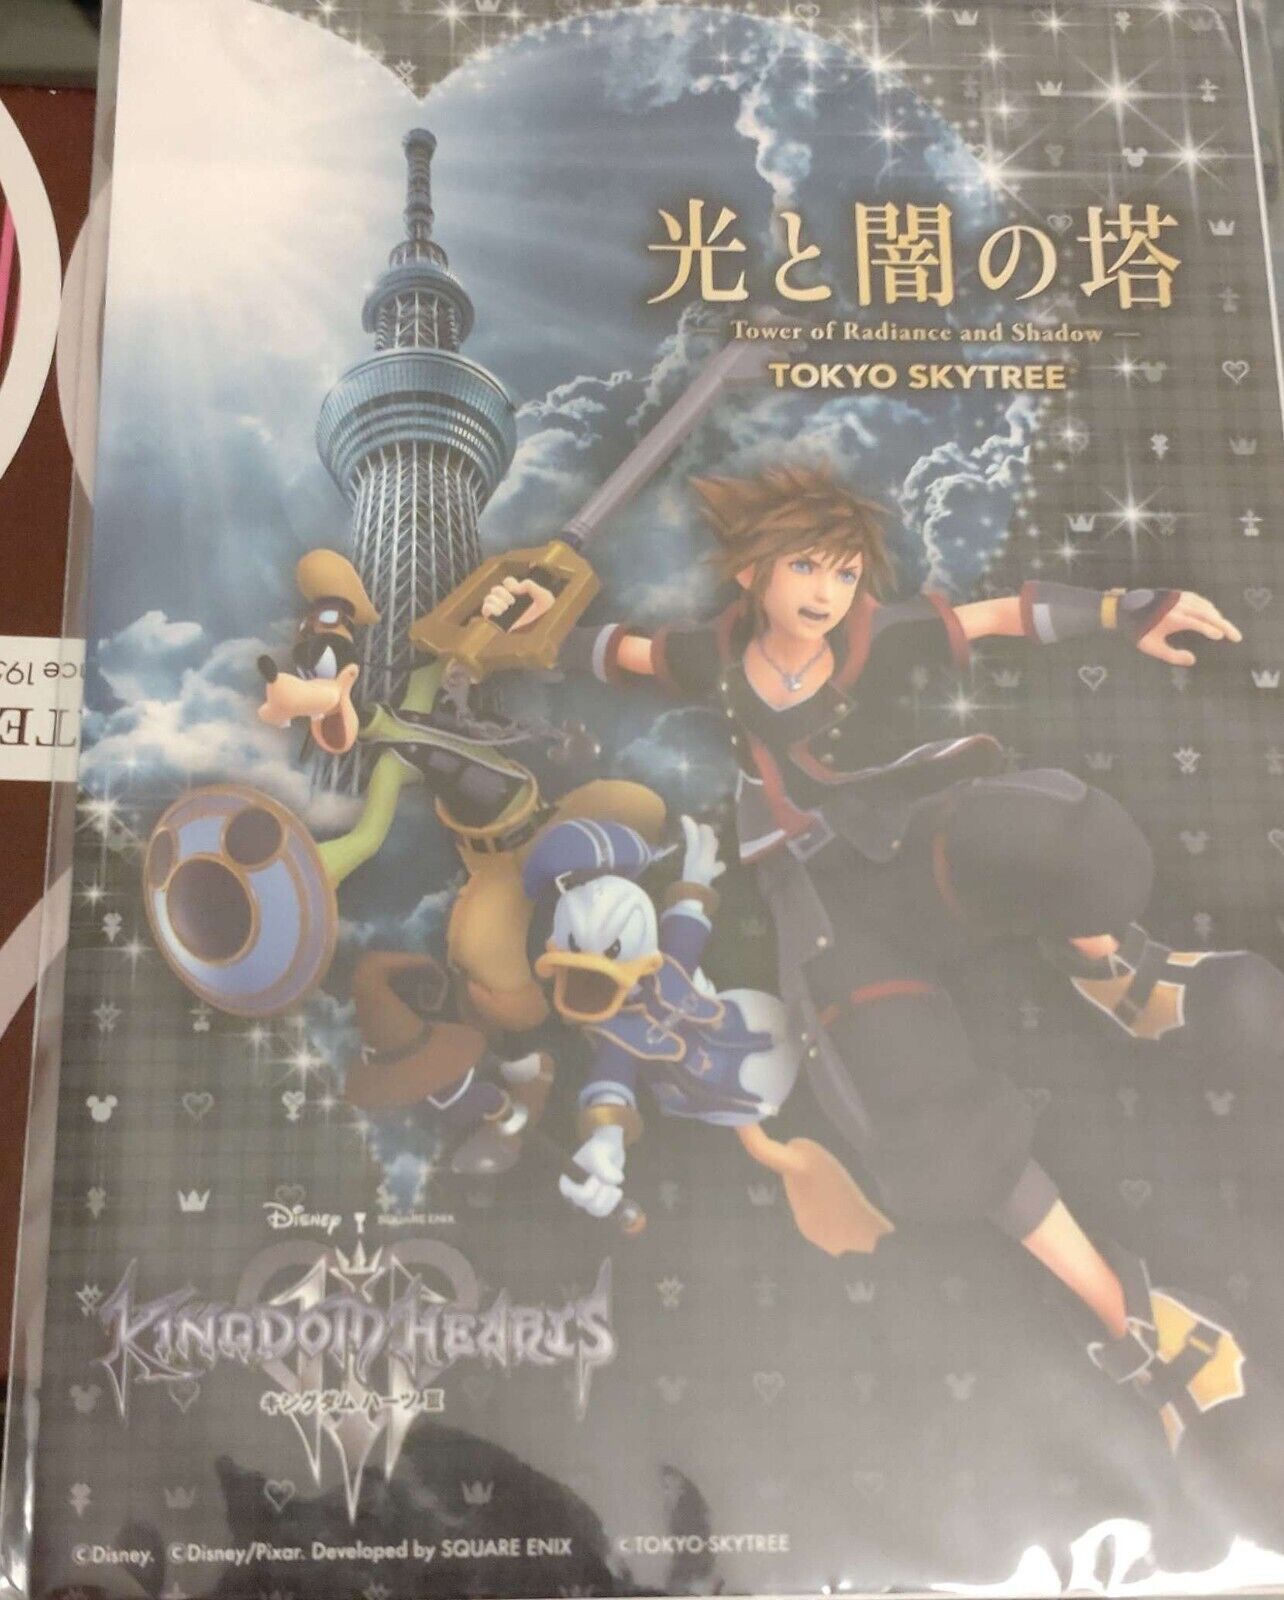 Kingdom Hearts 3 Tower of Radiance and Shadow Tokyo Skytree KH3 Disney Postcard